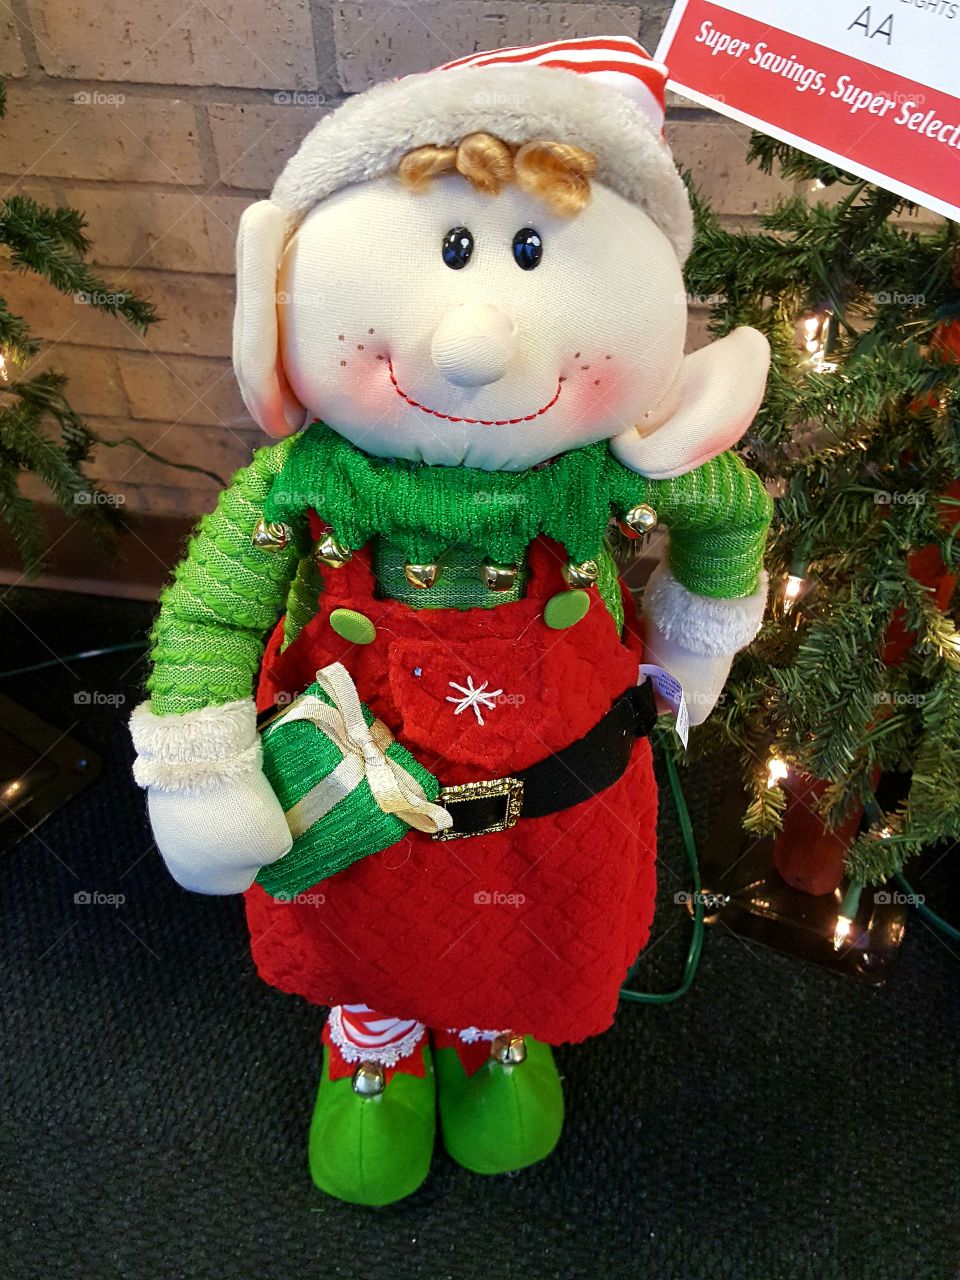 Such a cute holiday elf!